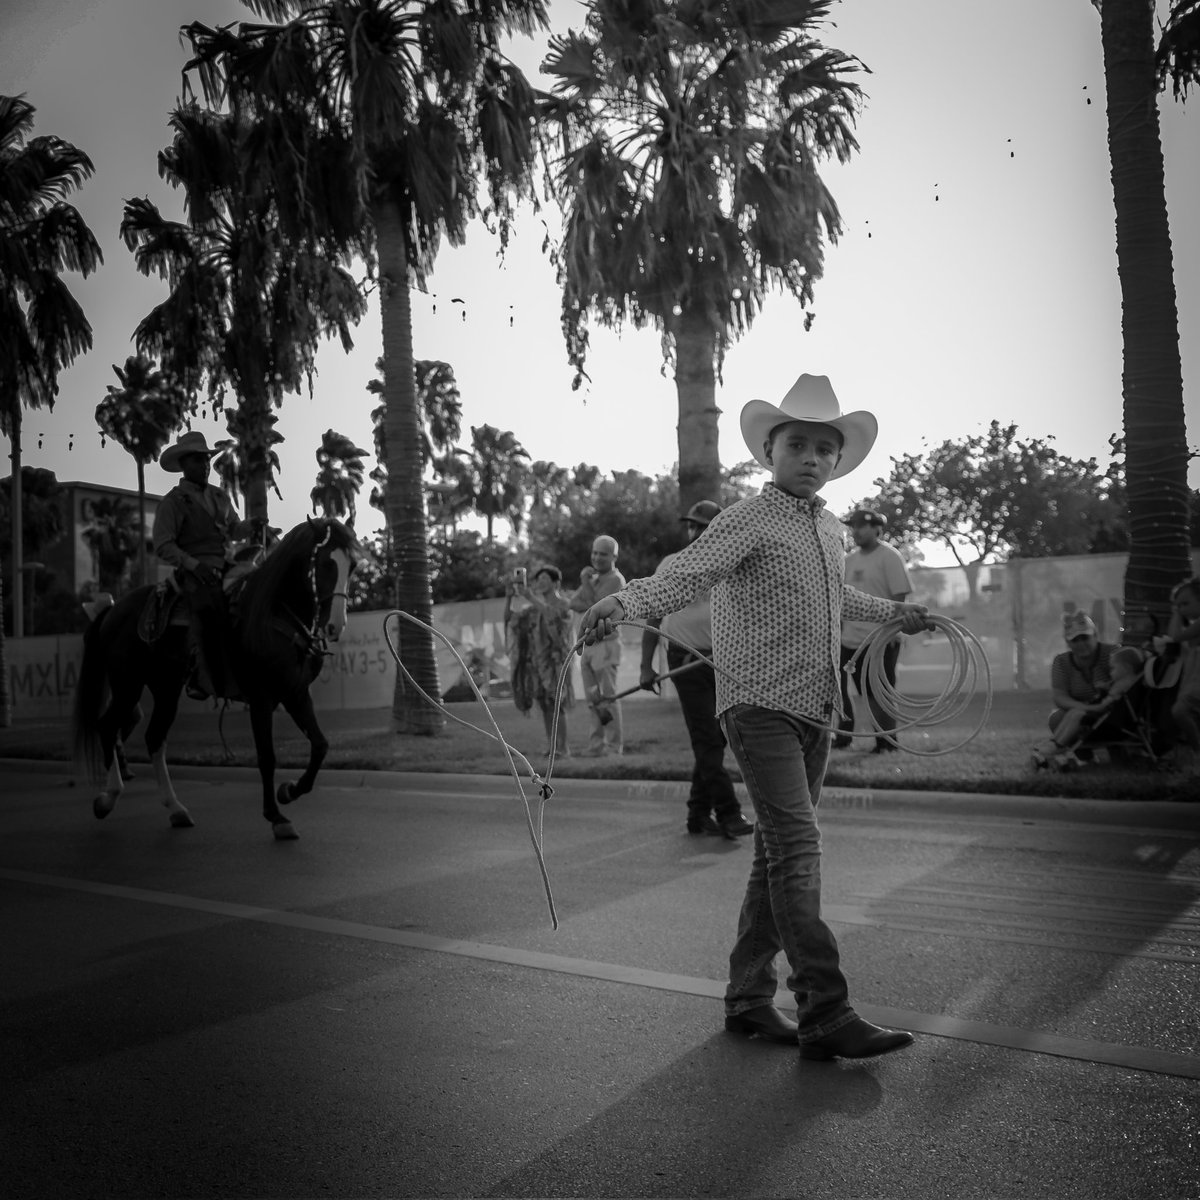 #mxlanfestival #Cultura #blackandwhite #blackandwhitephotography #streetphotography #bnw #sigmalens #sigmaphoto #Cowboys